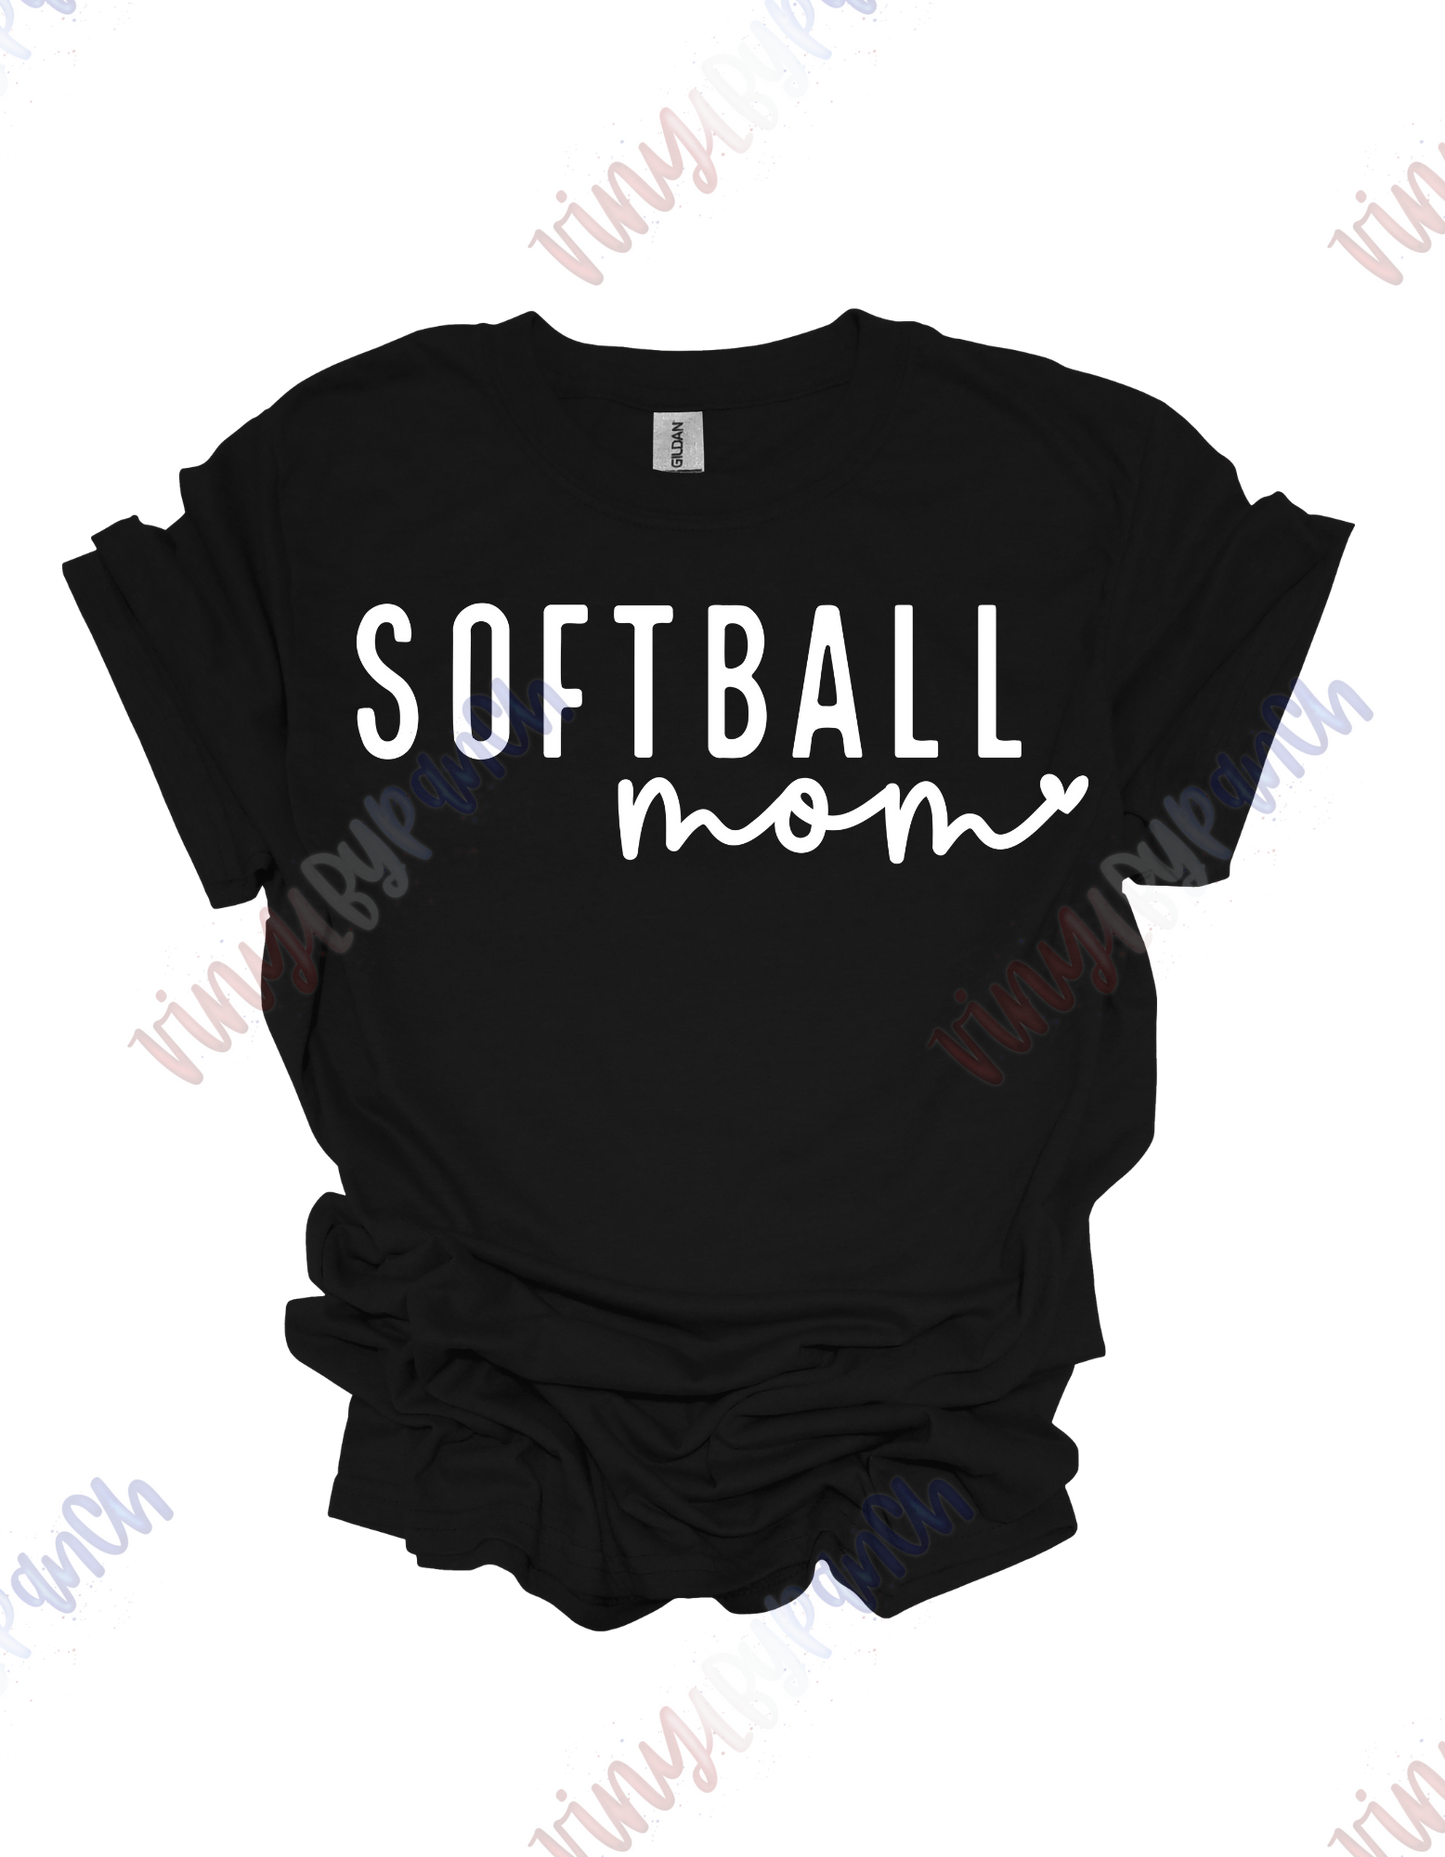 Sport Mom Shirts